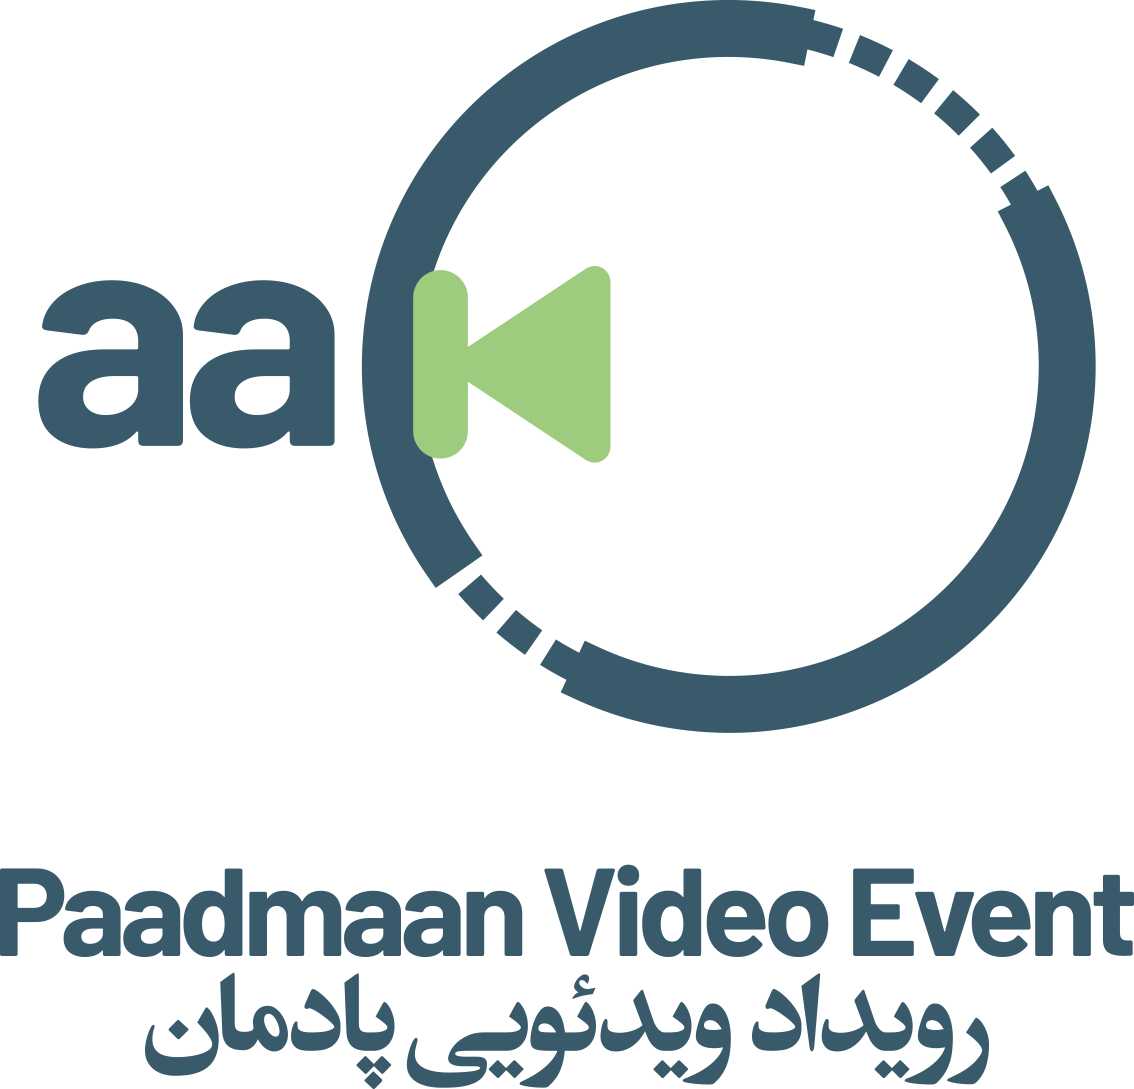 Paadman video event 